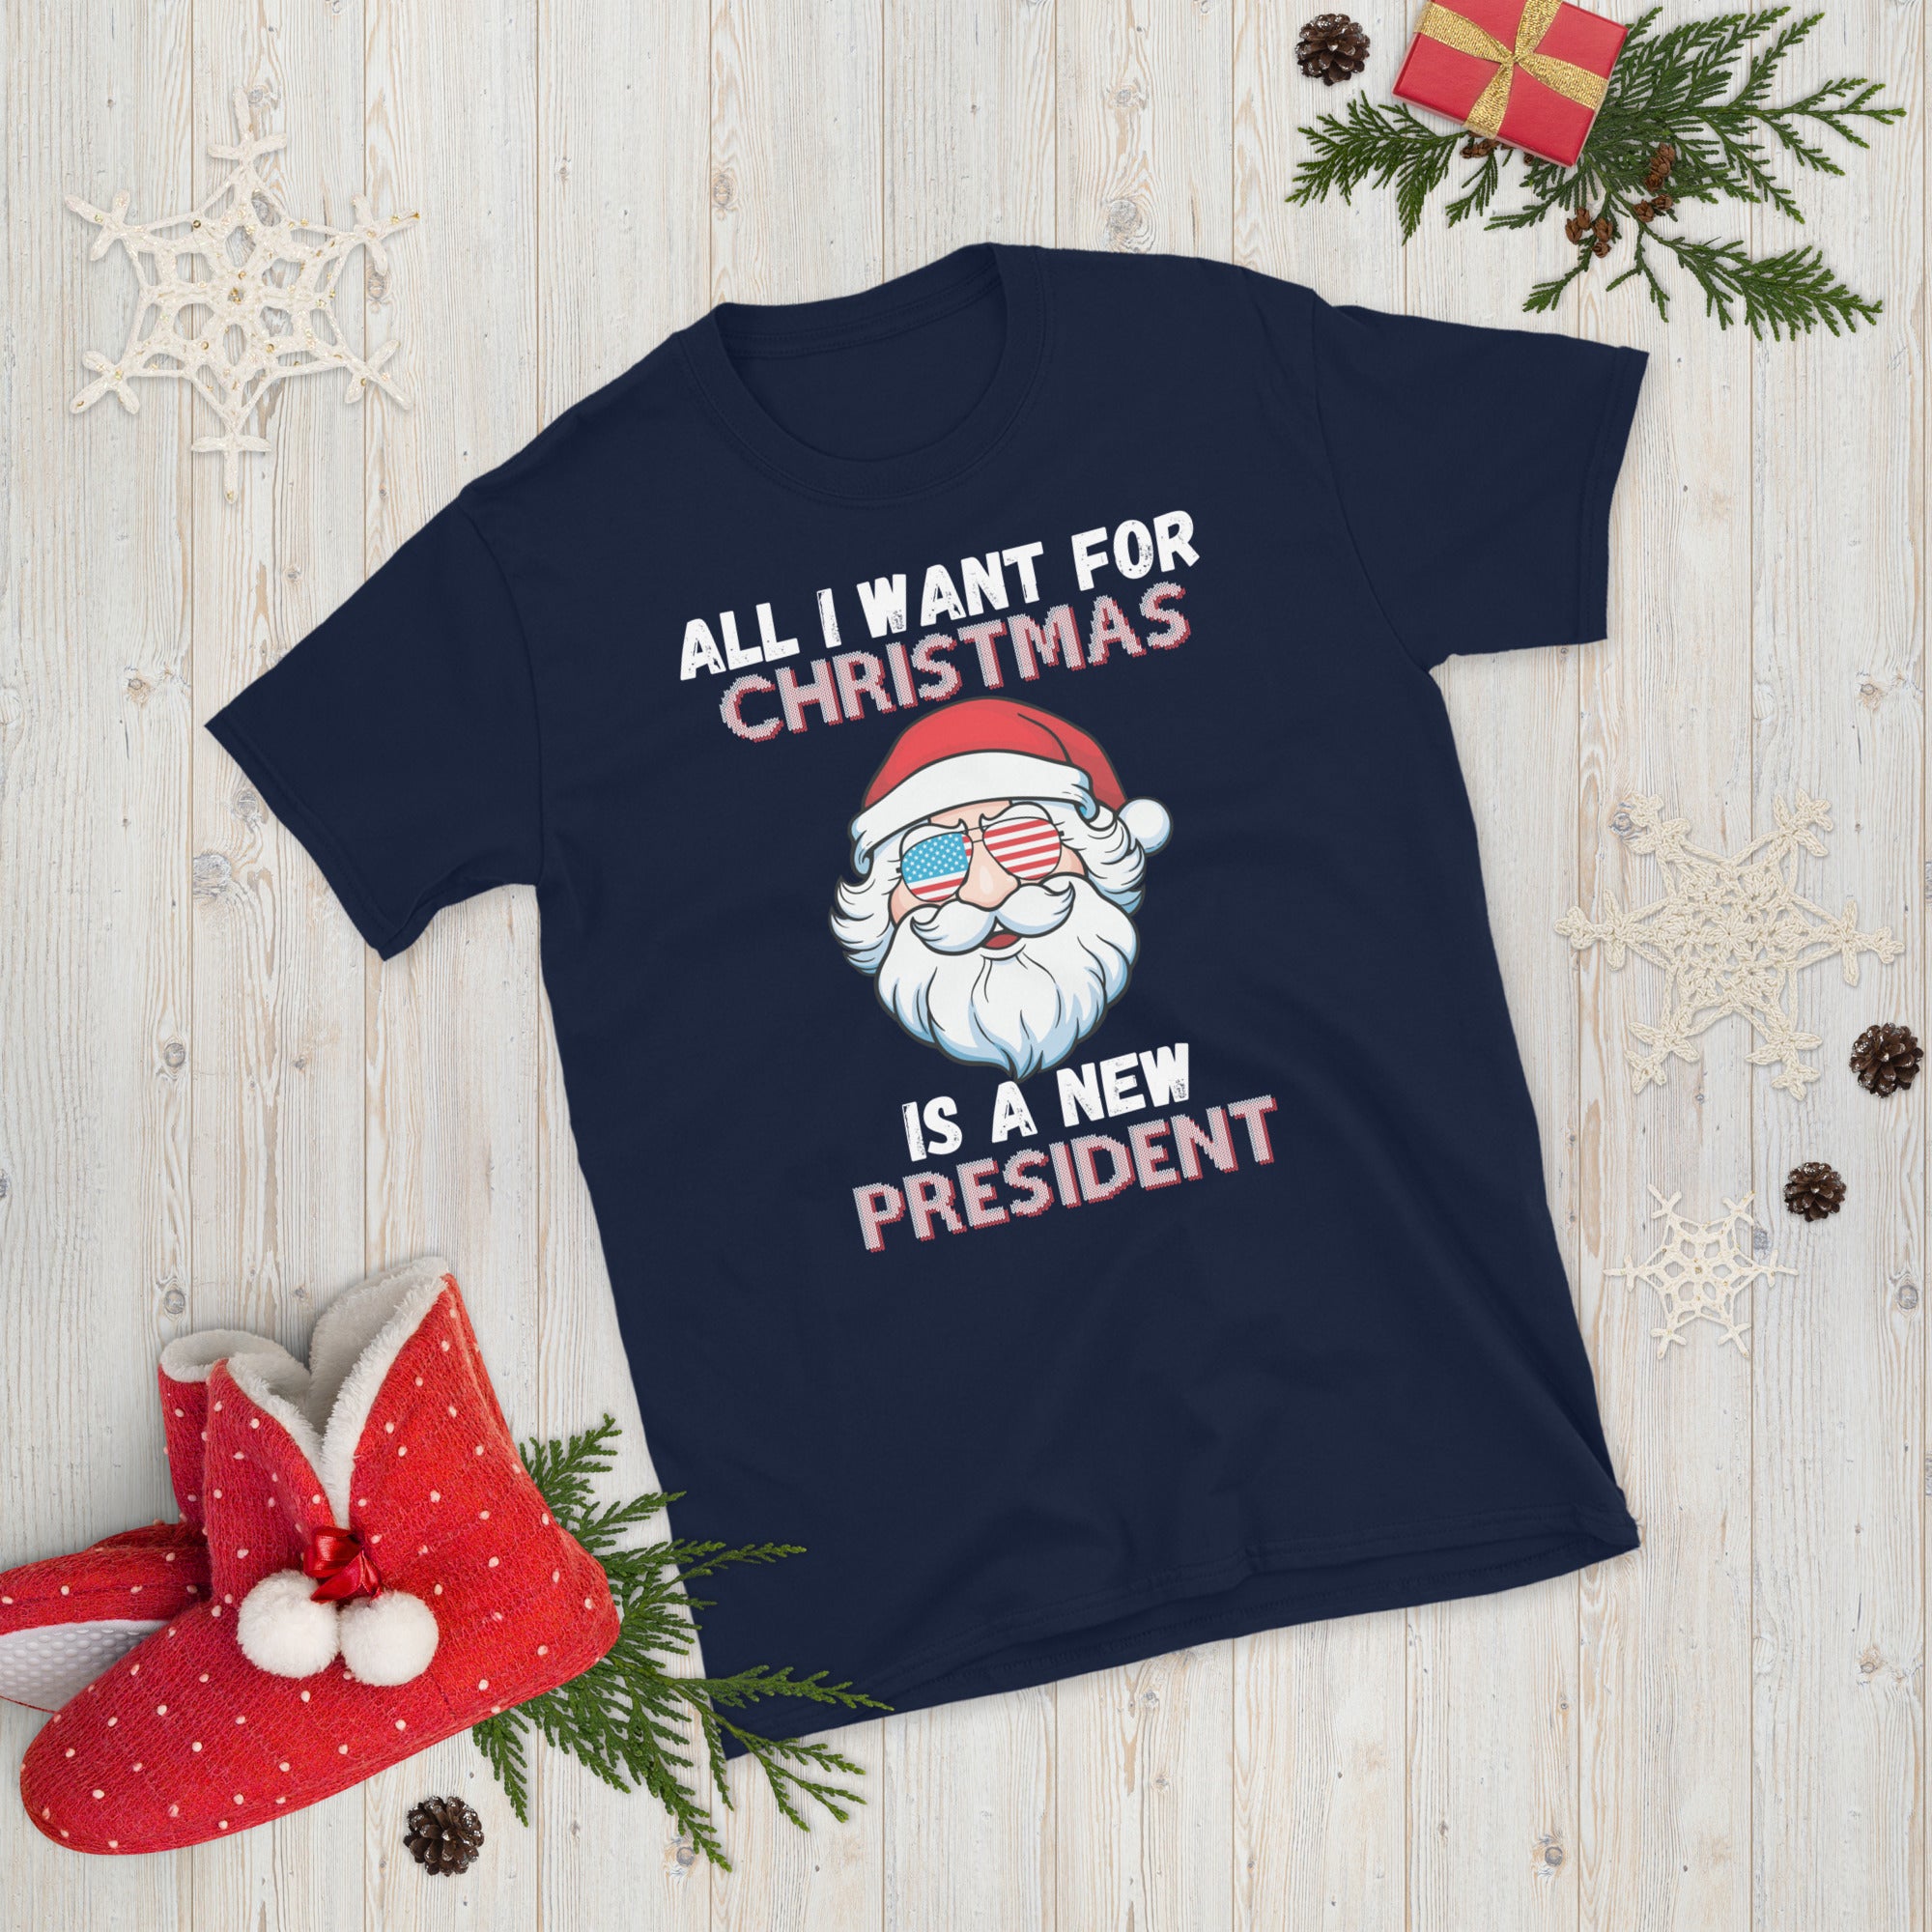 All I Want For Christmas Is A New President, Republican Christmas Shirt, FJB Xmas T Shirt, Xmas Conservative Shirt, Impeach Biden Shirt - Madeinsea©